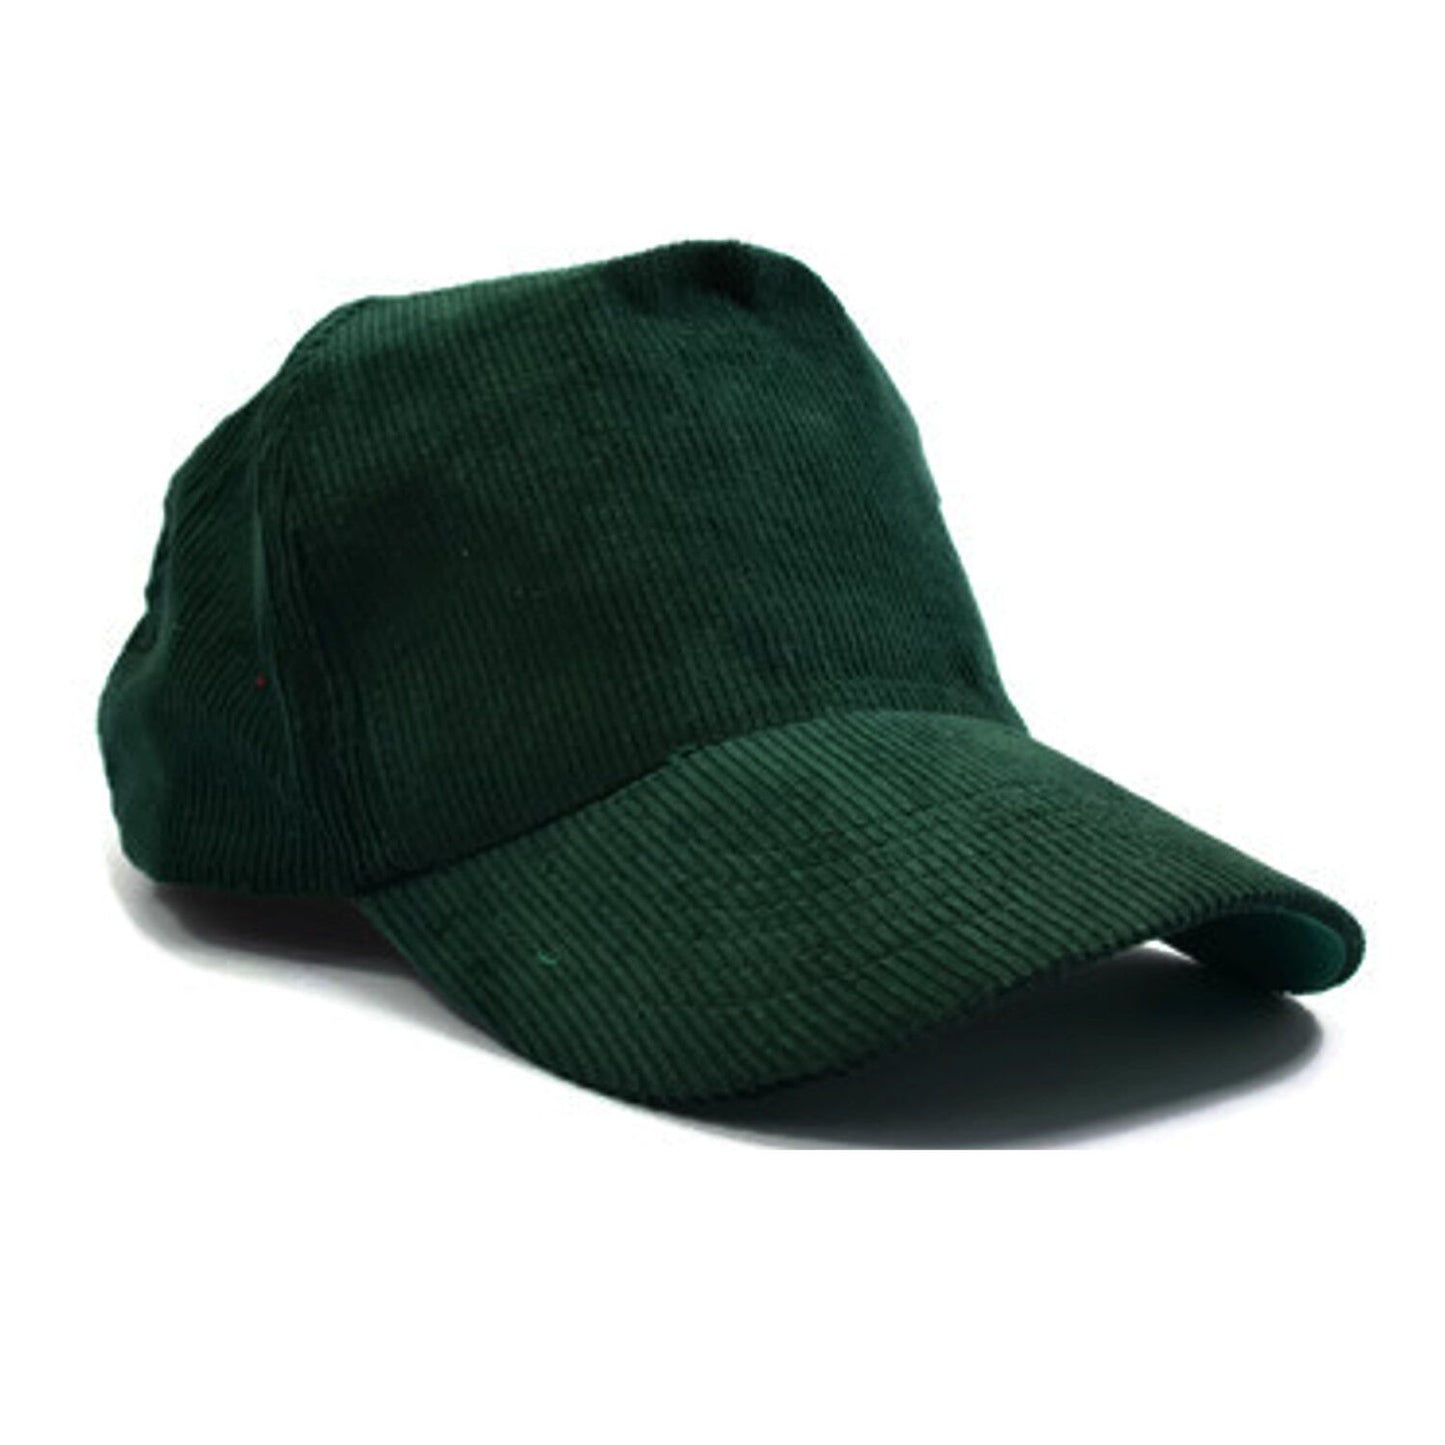 Green Classic Adjustable Baseball Caps - Work Casual Sports Leisure